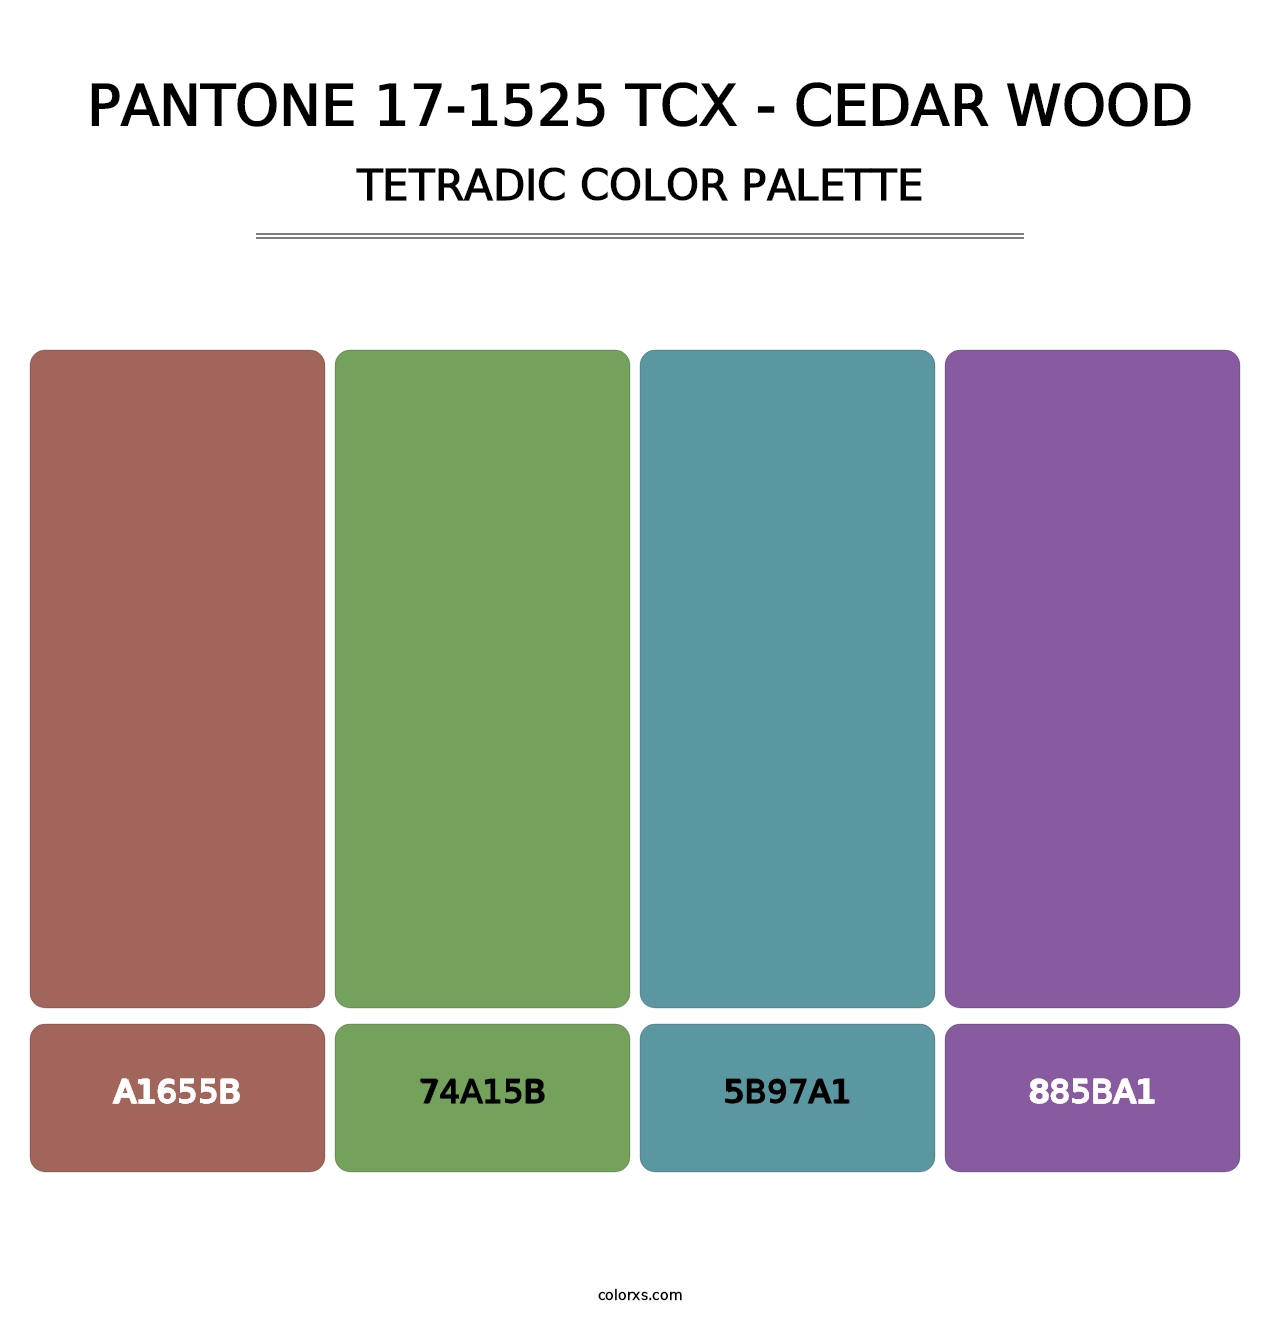 PANTONE 17-1525 TCX - Cedar Wood - Tetradic Color Palette